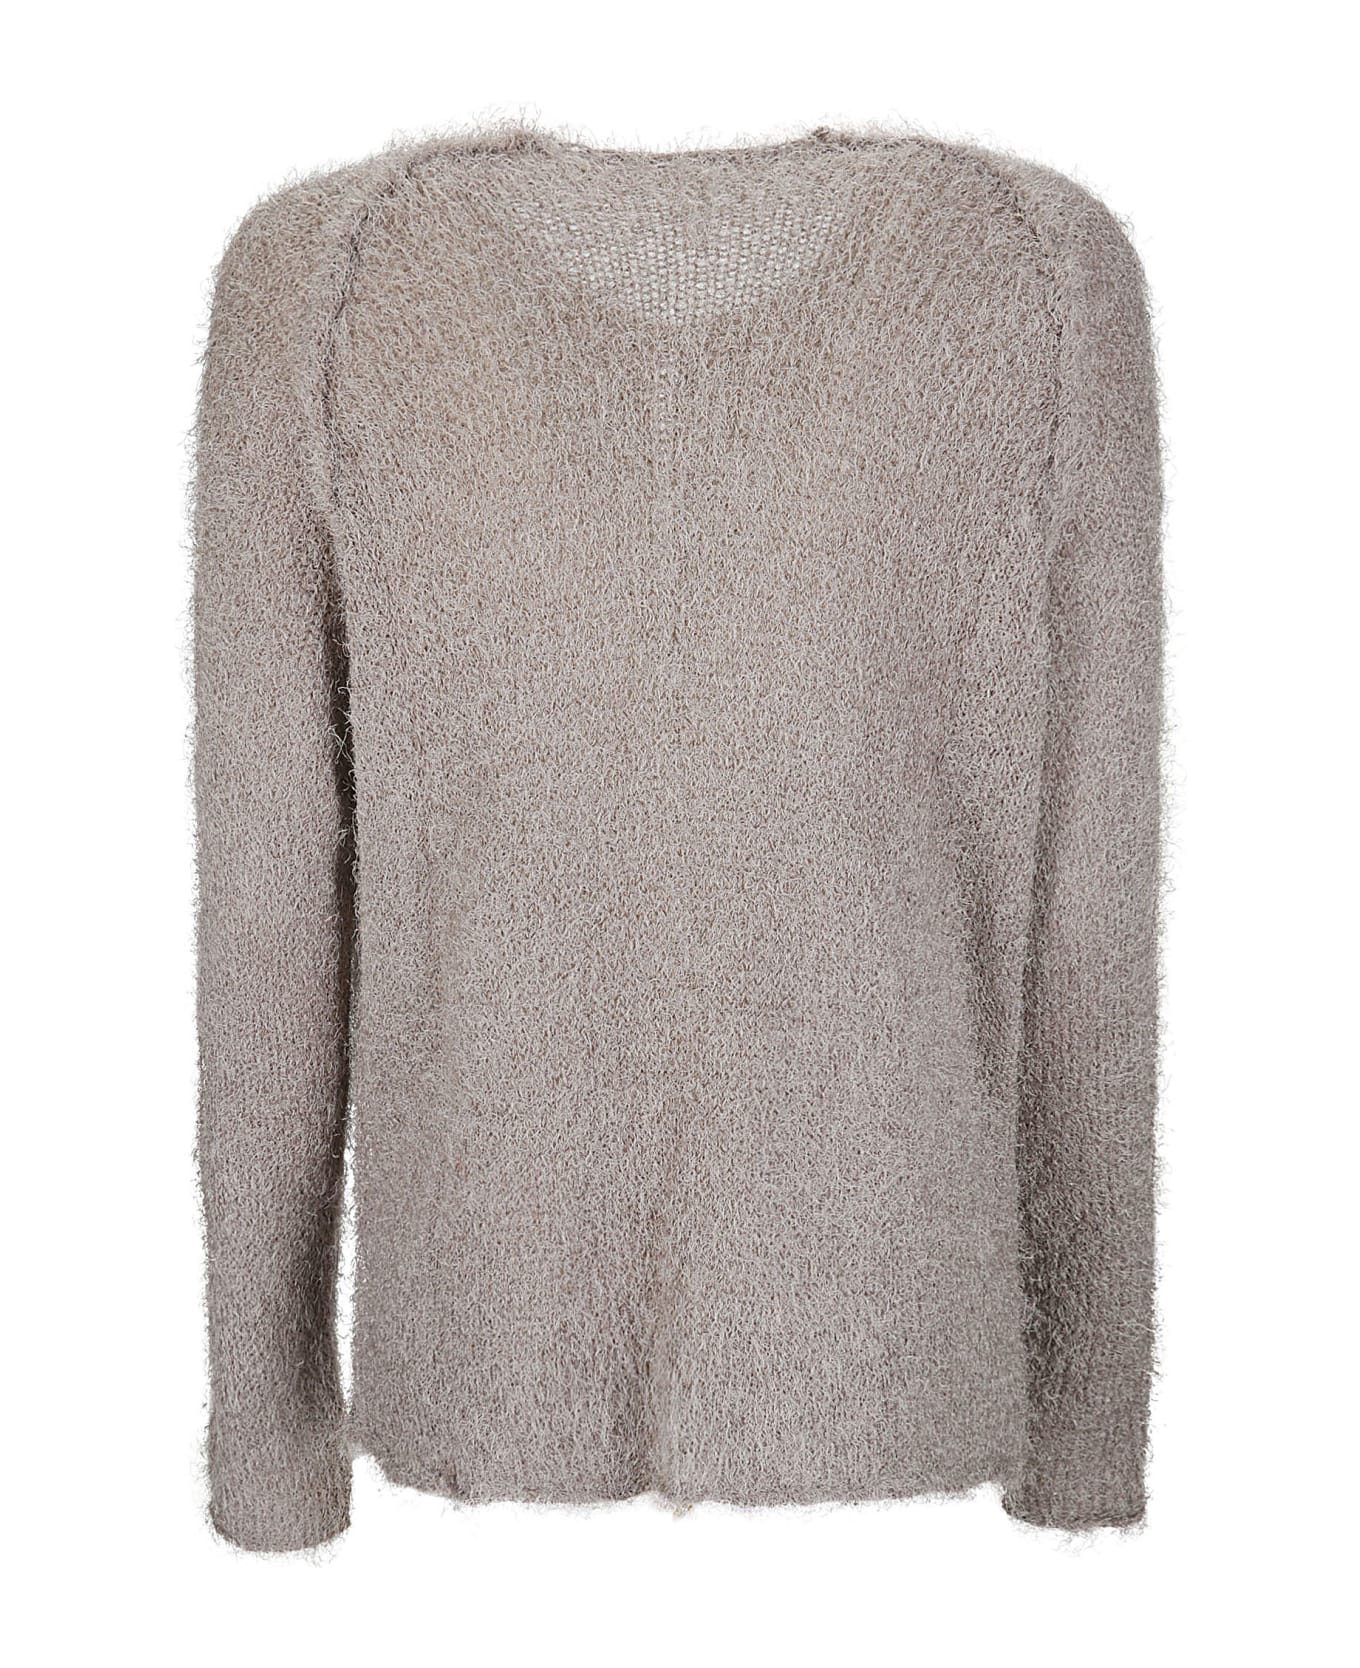 Boboutic Sweater - GRAY-PINK ニットウェア